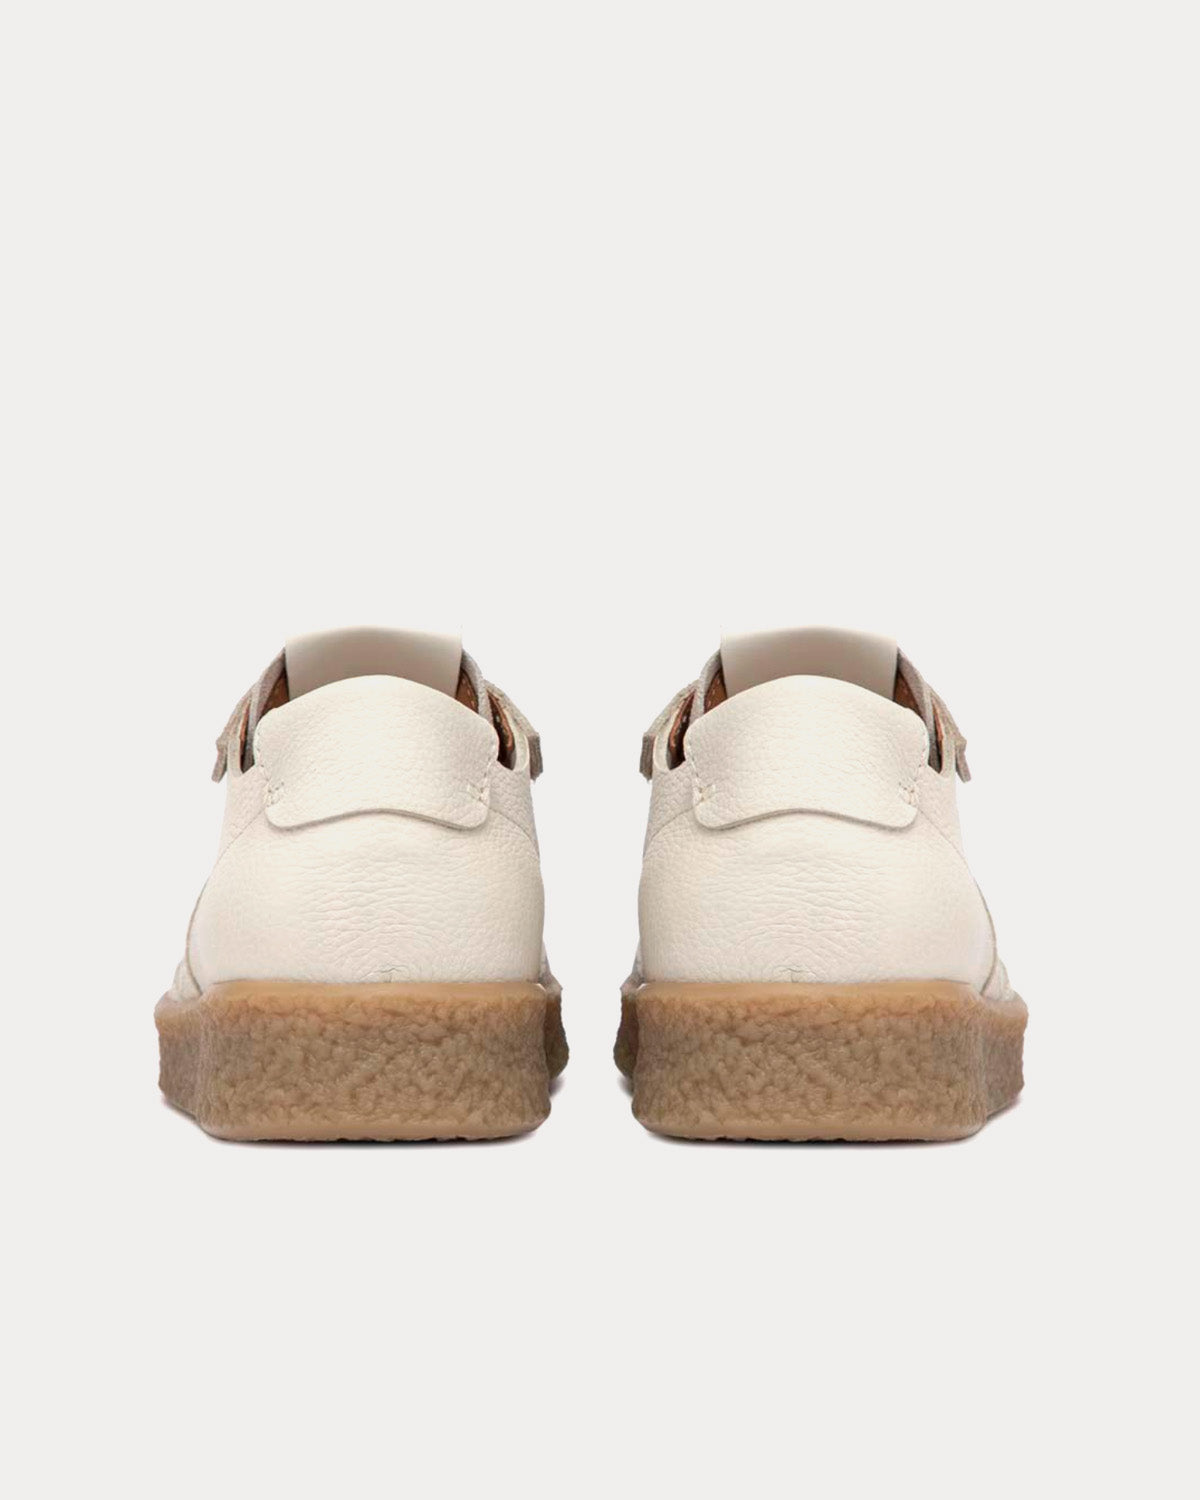 Buttero - Crespo Leather White Low Top Sneakers